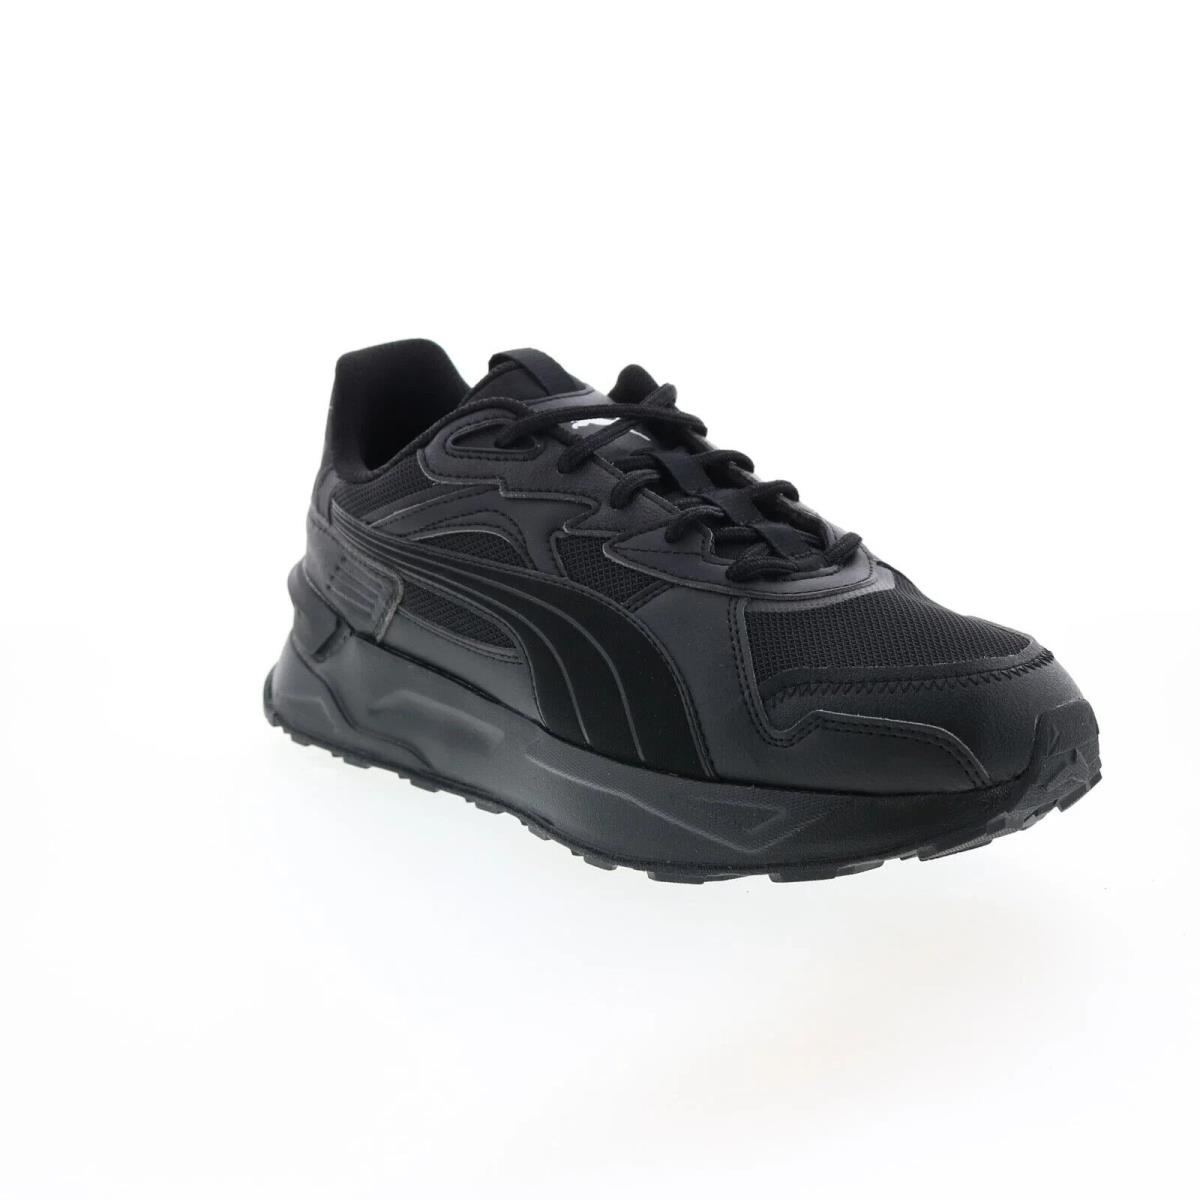 Puma N59102 Men Black Mirage Sport Asphalt Lace Up Sneakers Size EU 42.5 US 9.5